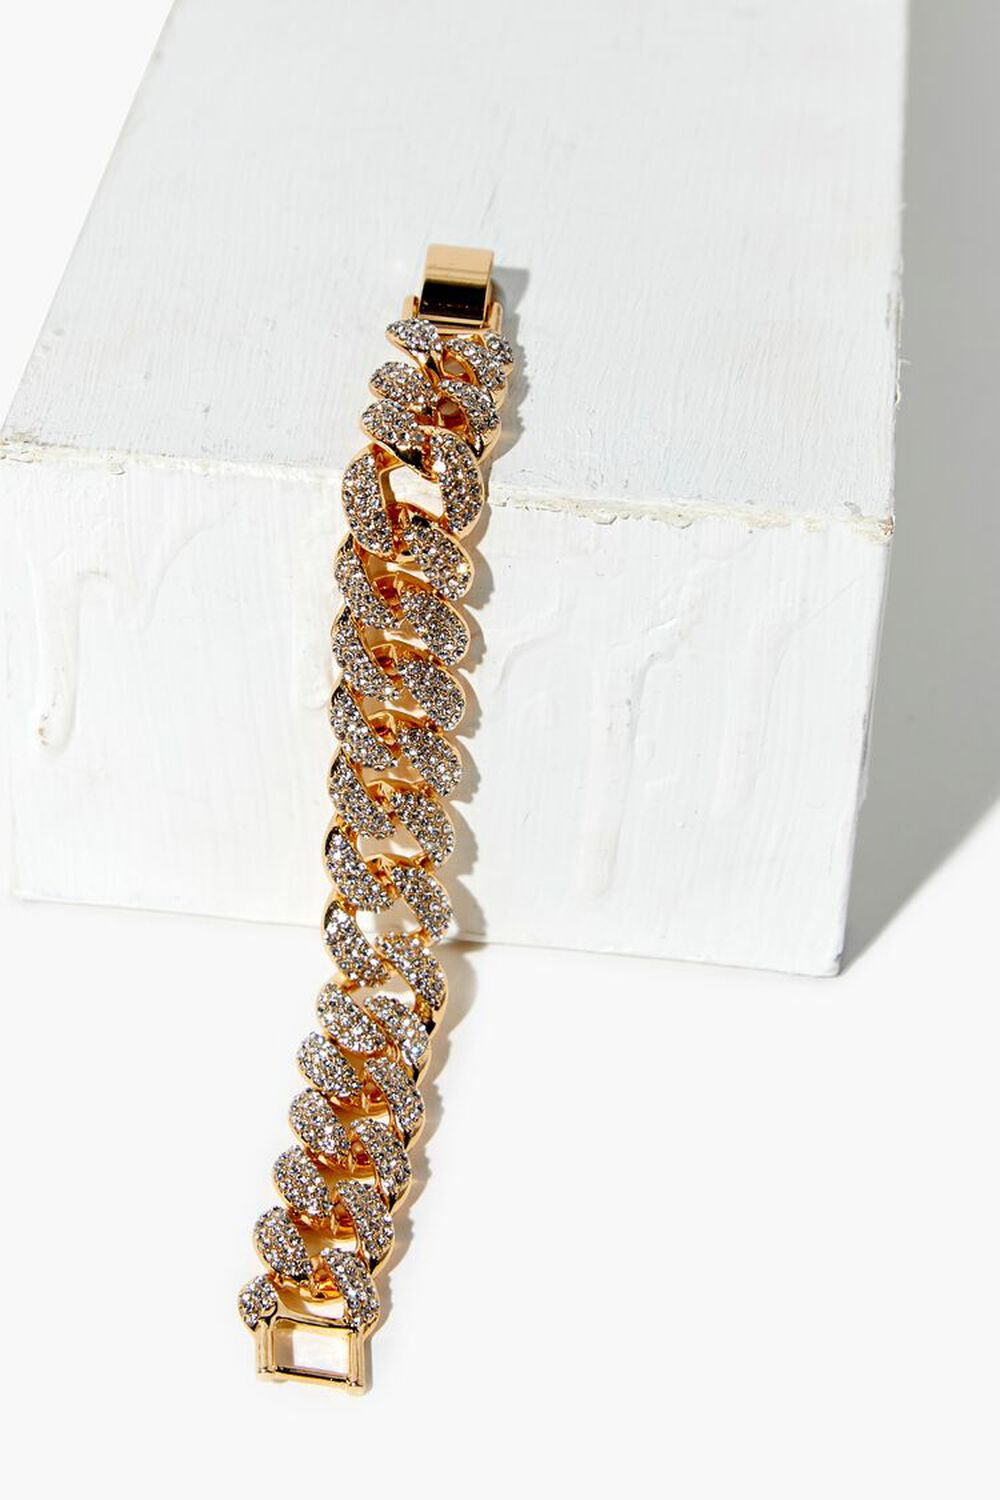 GOLD/CLEAR Chunky Rhinestone Curb Chain Bracelet, image 1